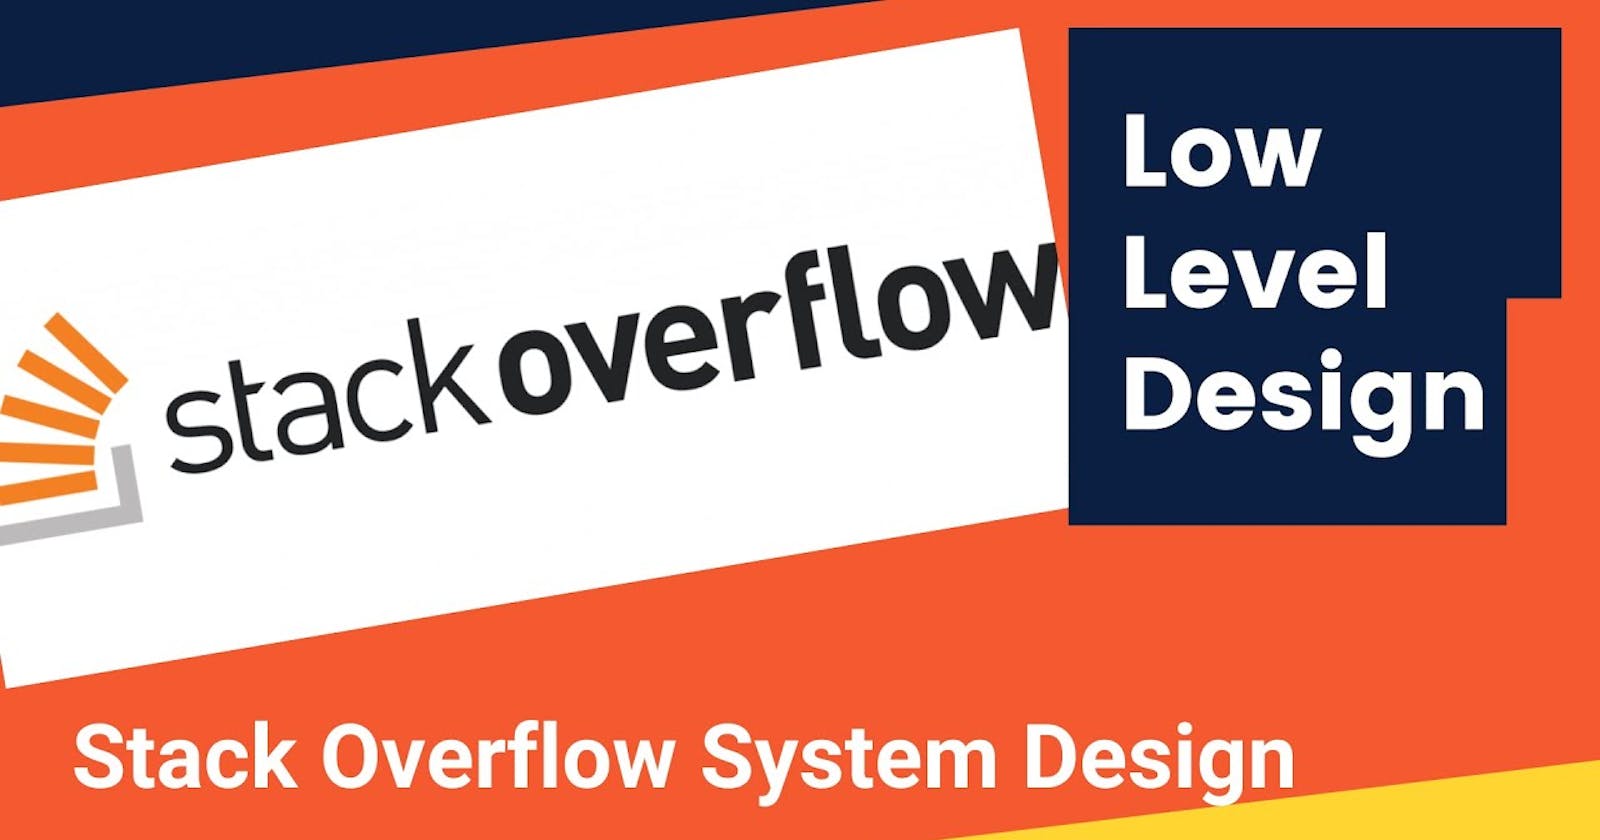 Design (LLD) Stack Overflow - Machine Coding Interview